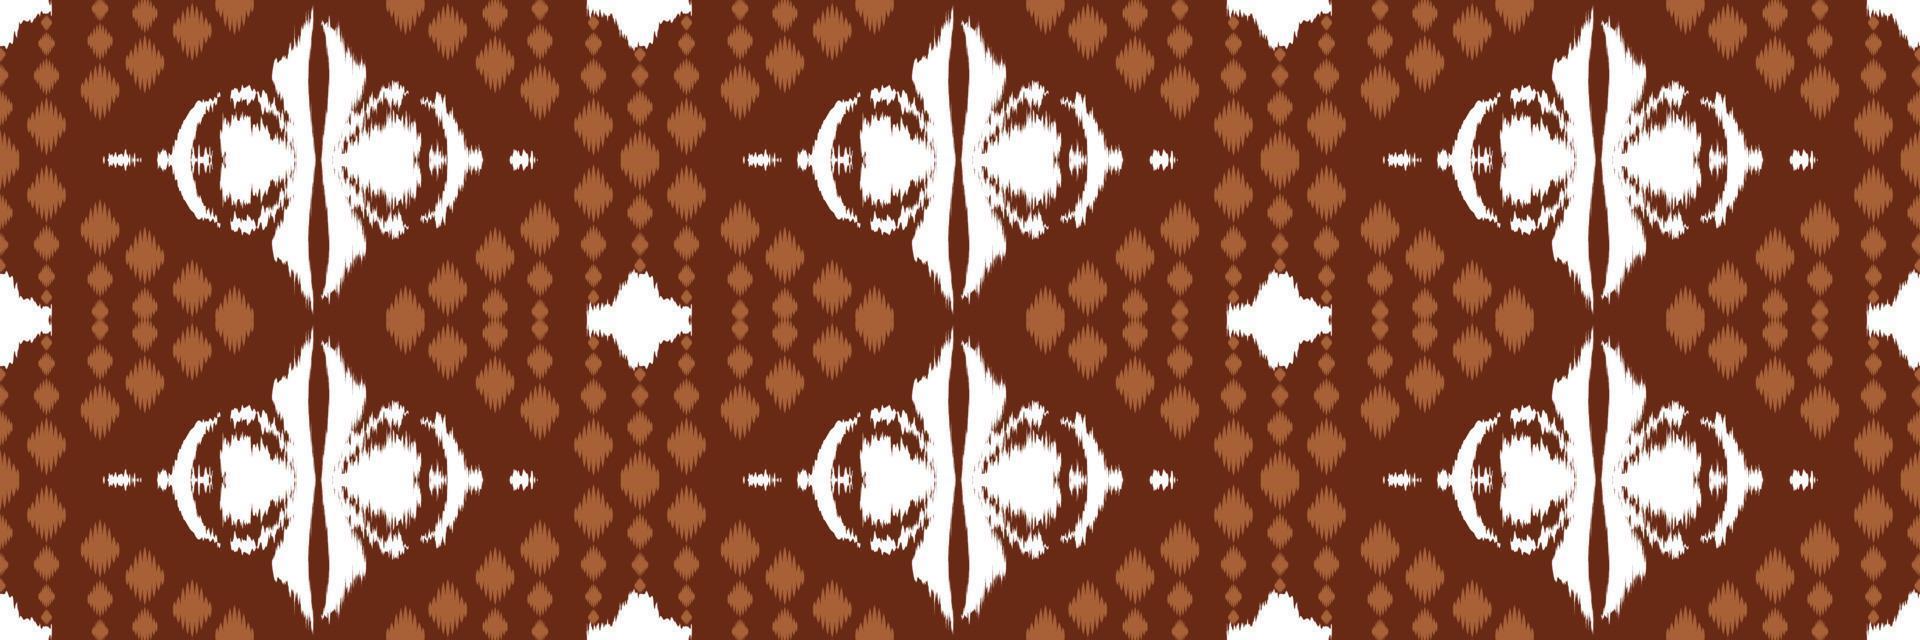 motivo têxtil batik textura ikat sem costura padrão design de vetor digital para impressão saree kurti borneo tecido borda pincel símbolos amostras elegantes